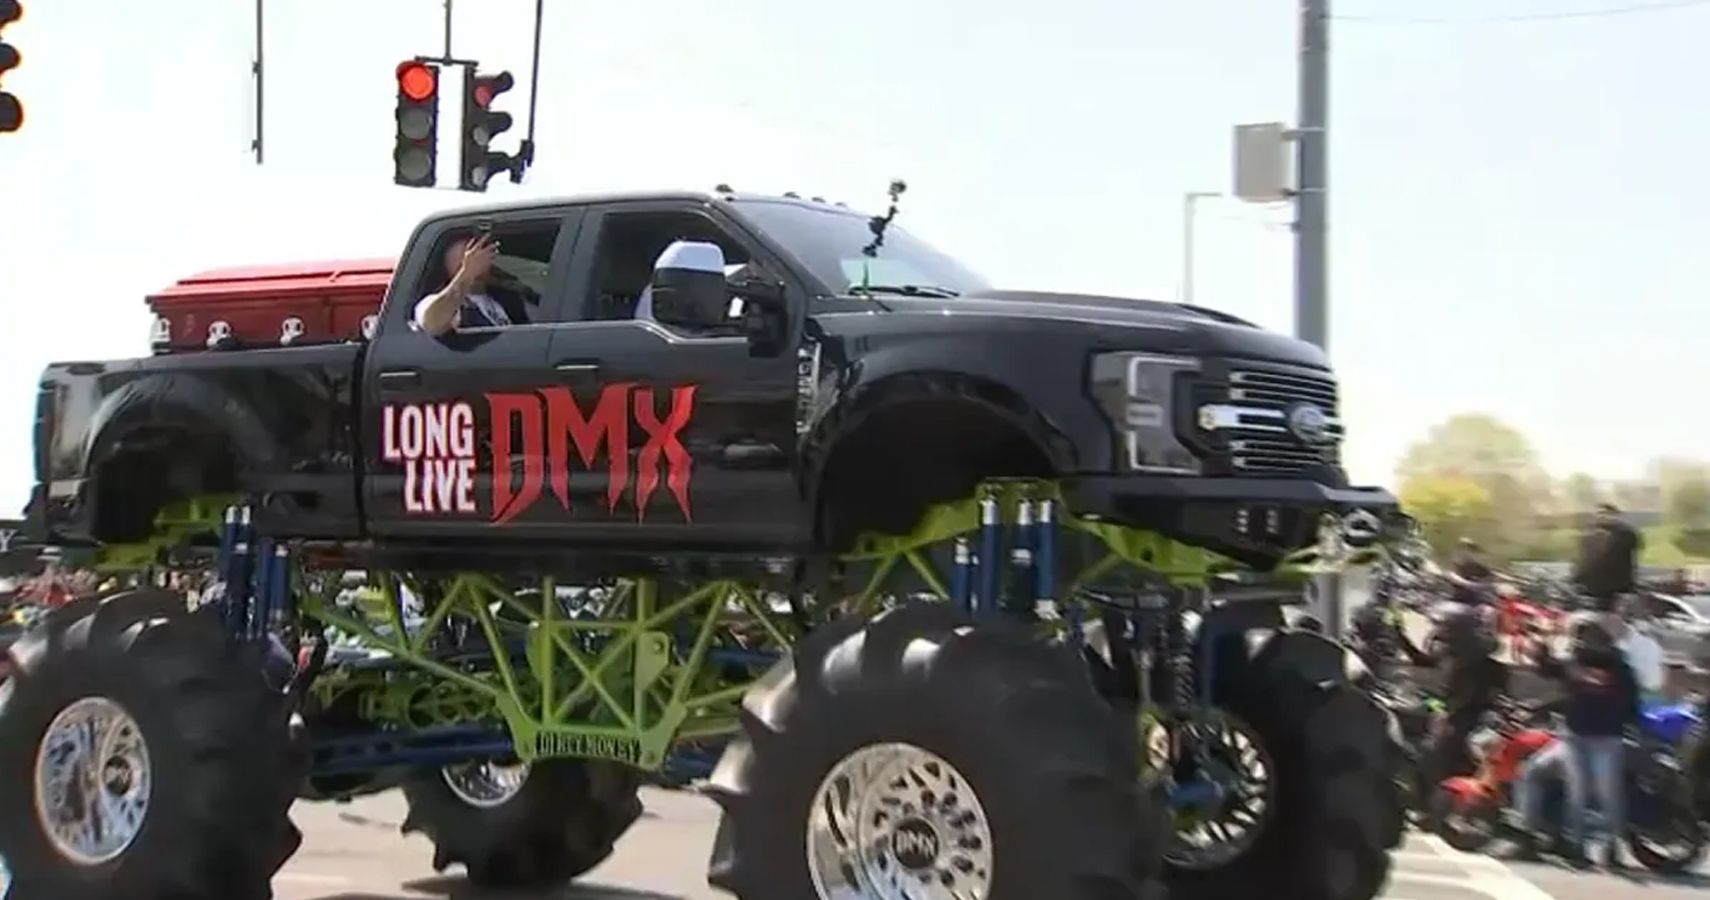 dmx funeral on a monster truck